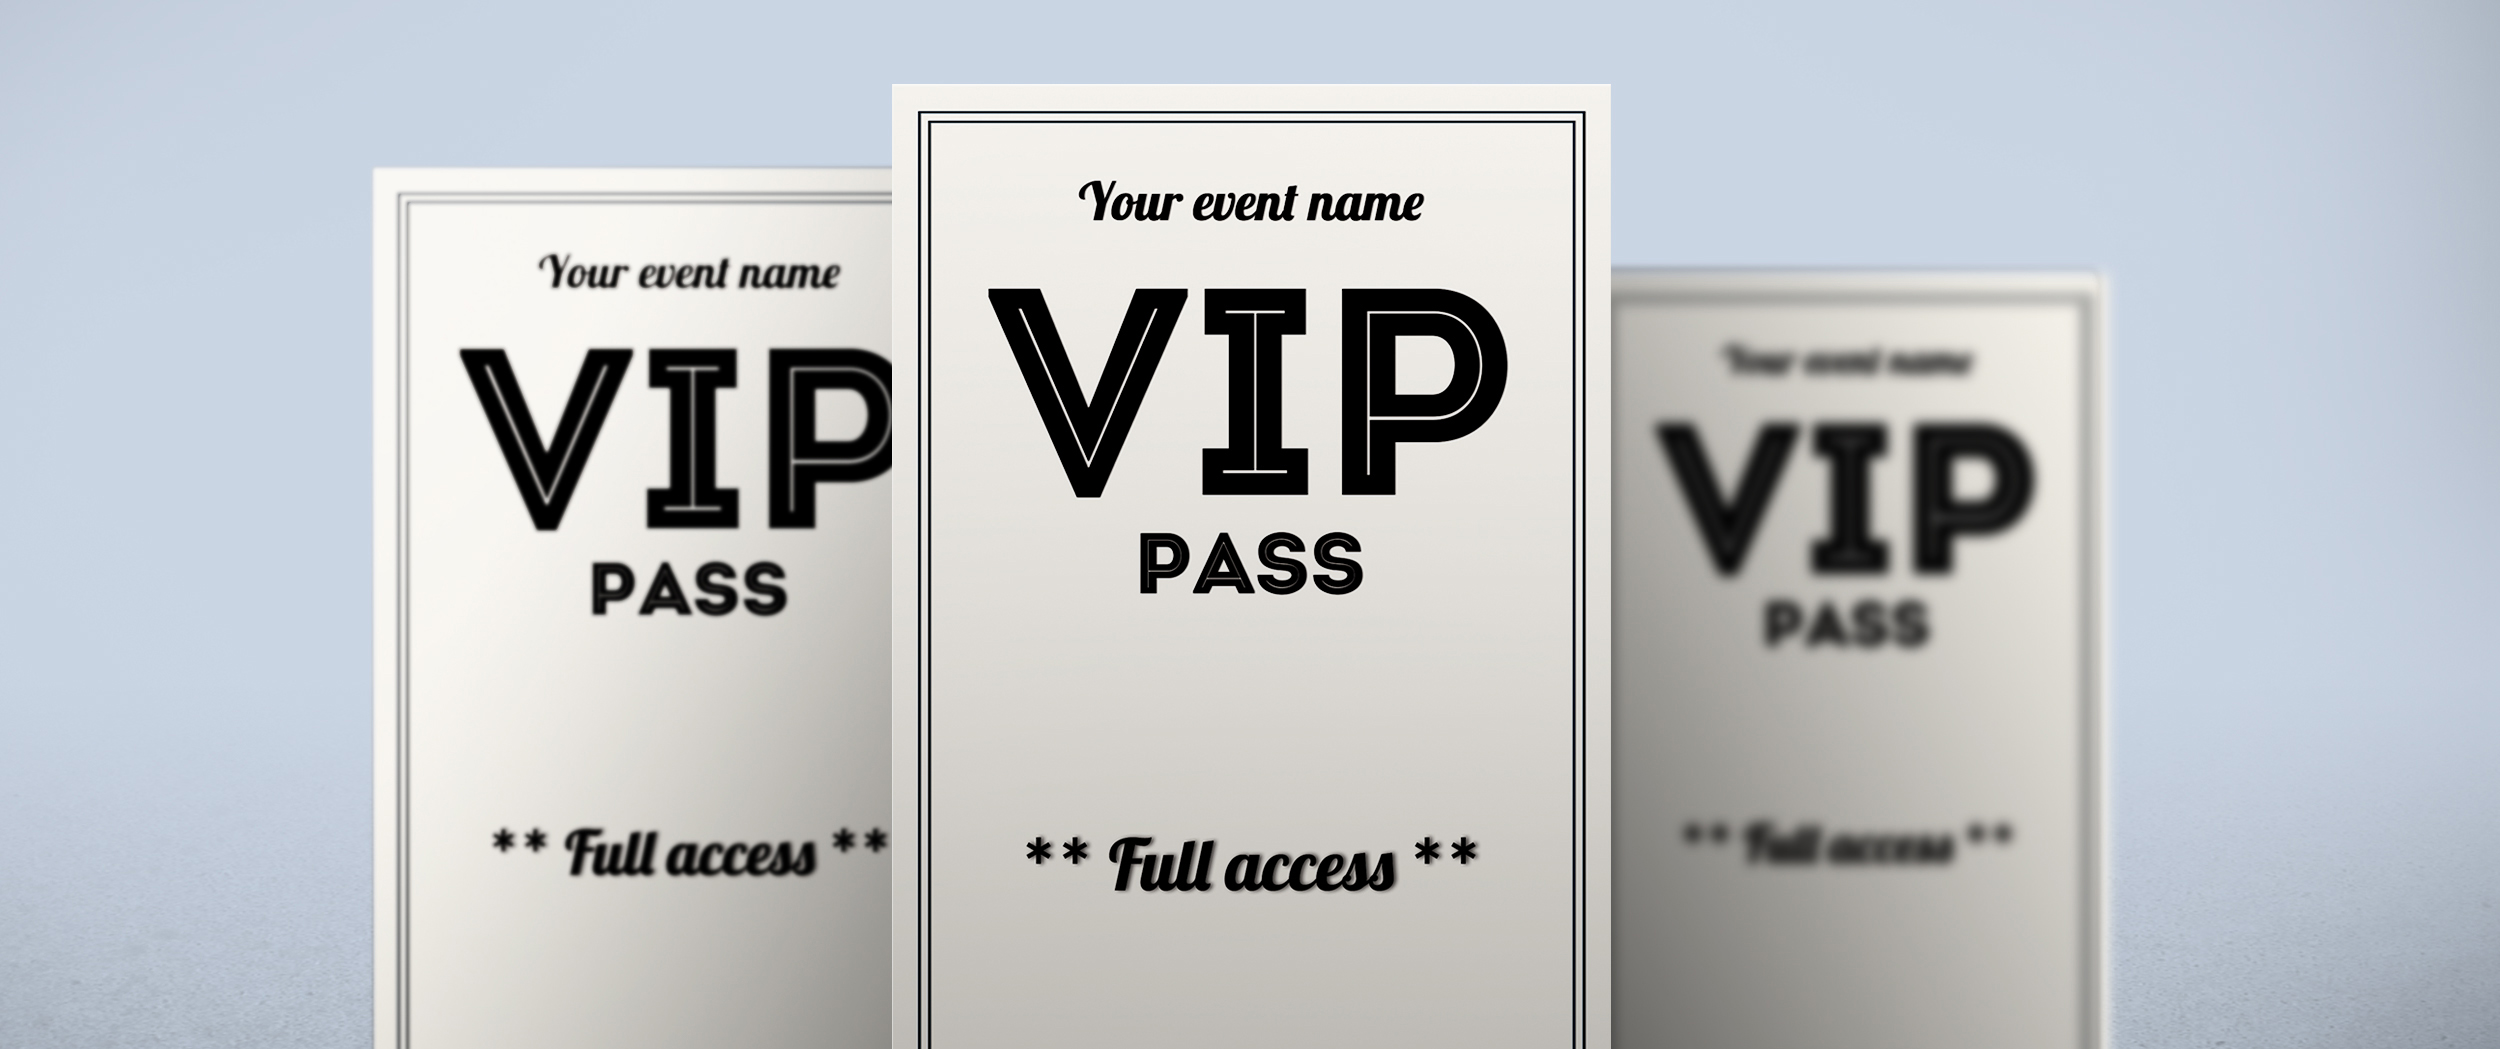 vip pass youparti special event open bar milano party evento musica